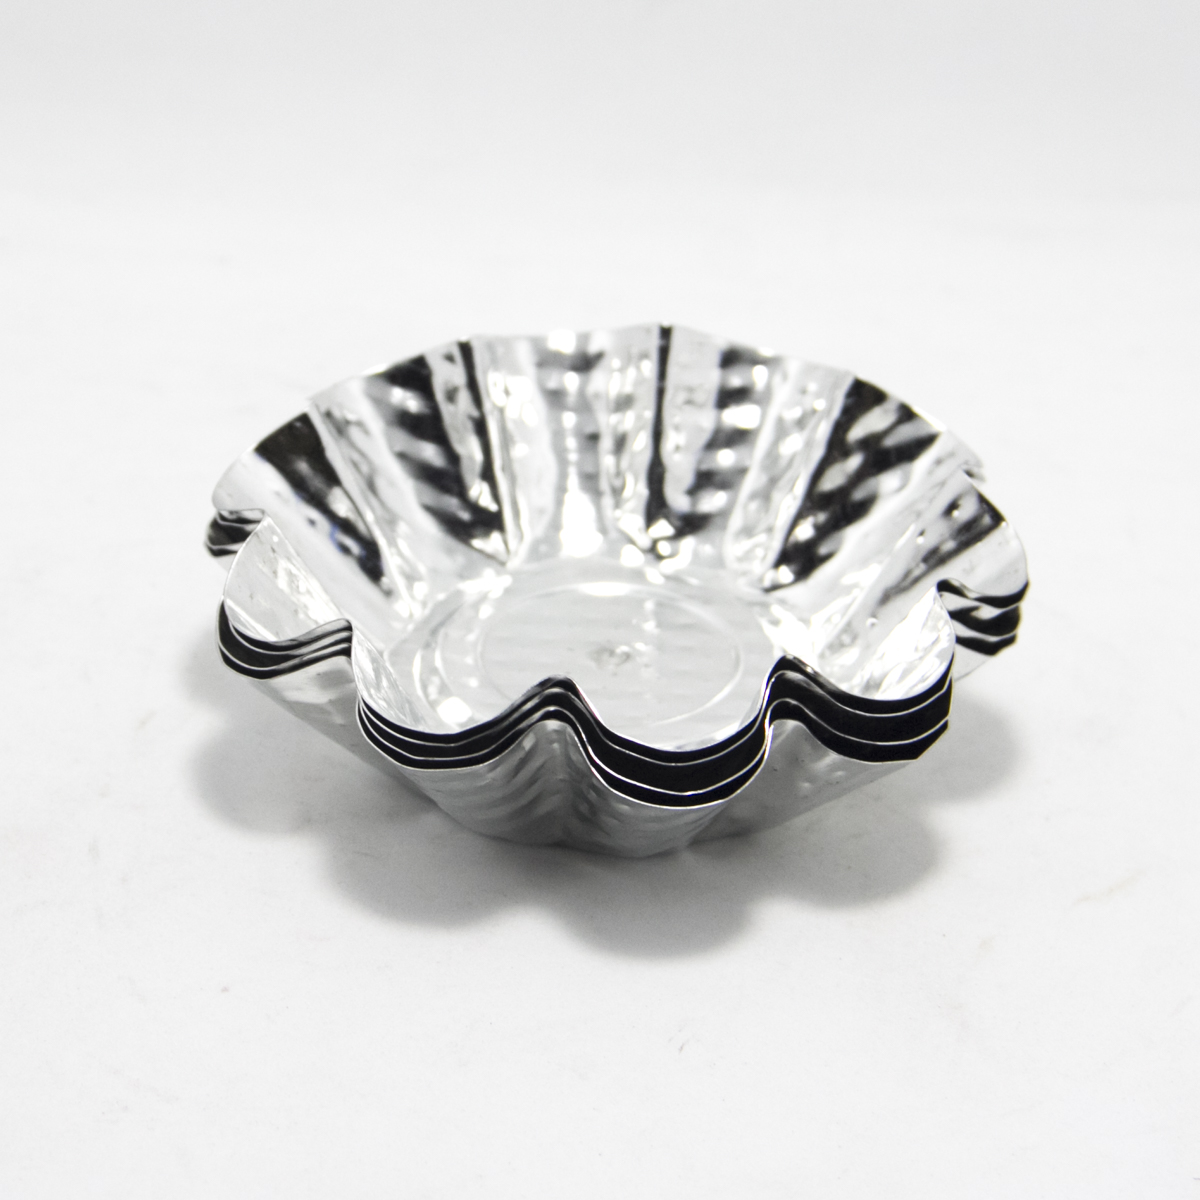 Kit x6 moldes Graciela - aluminio - 10,5cm